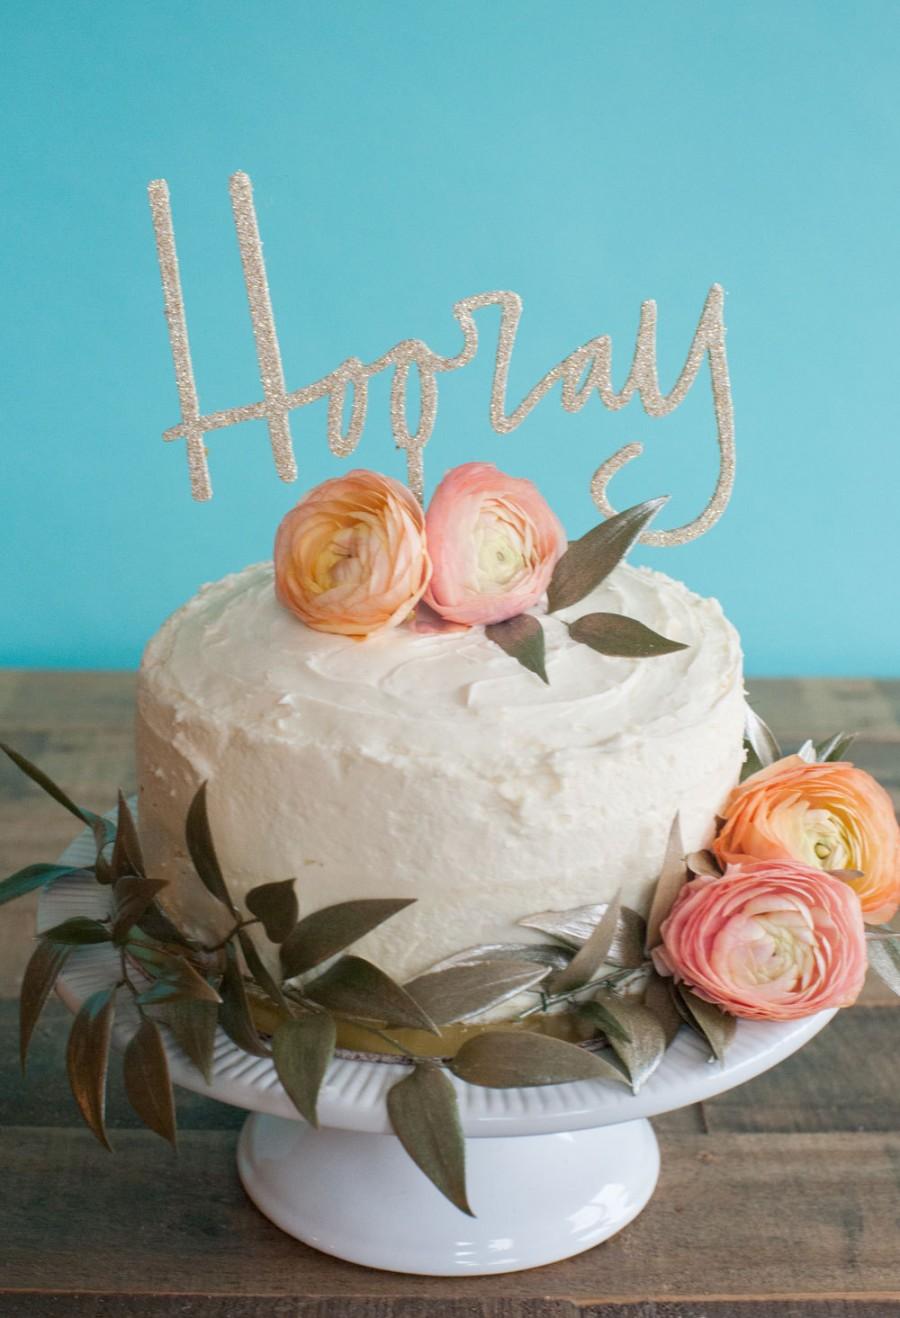 زفاف - Birthday, Annivesary or wedding cake topper - HOORAY in gold or champagne glitter or wood